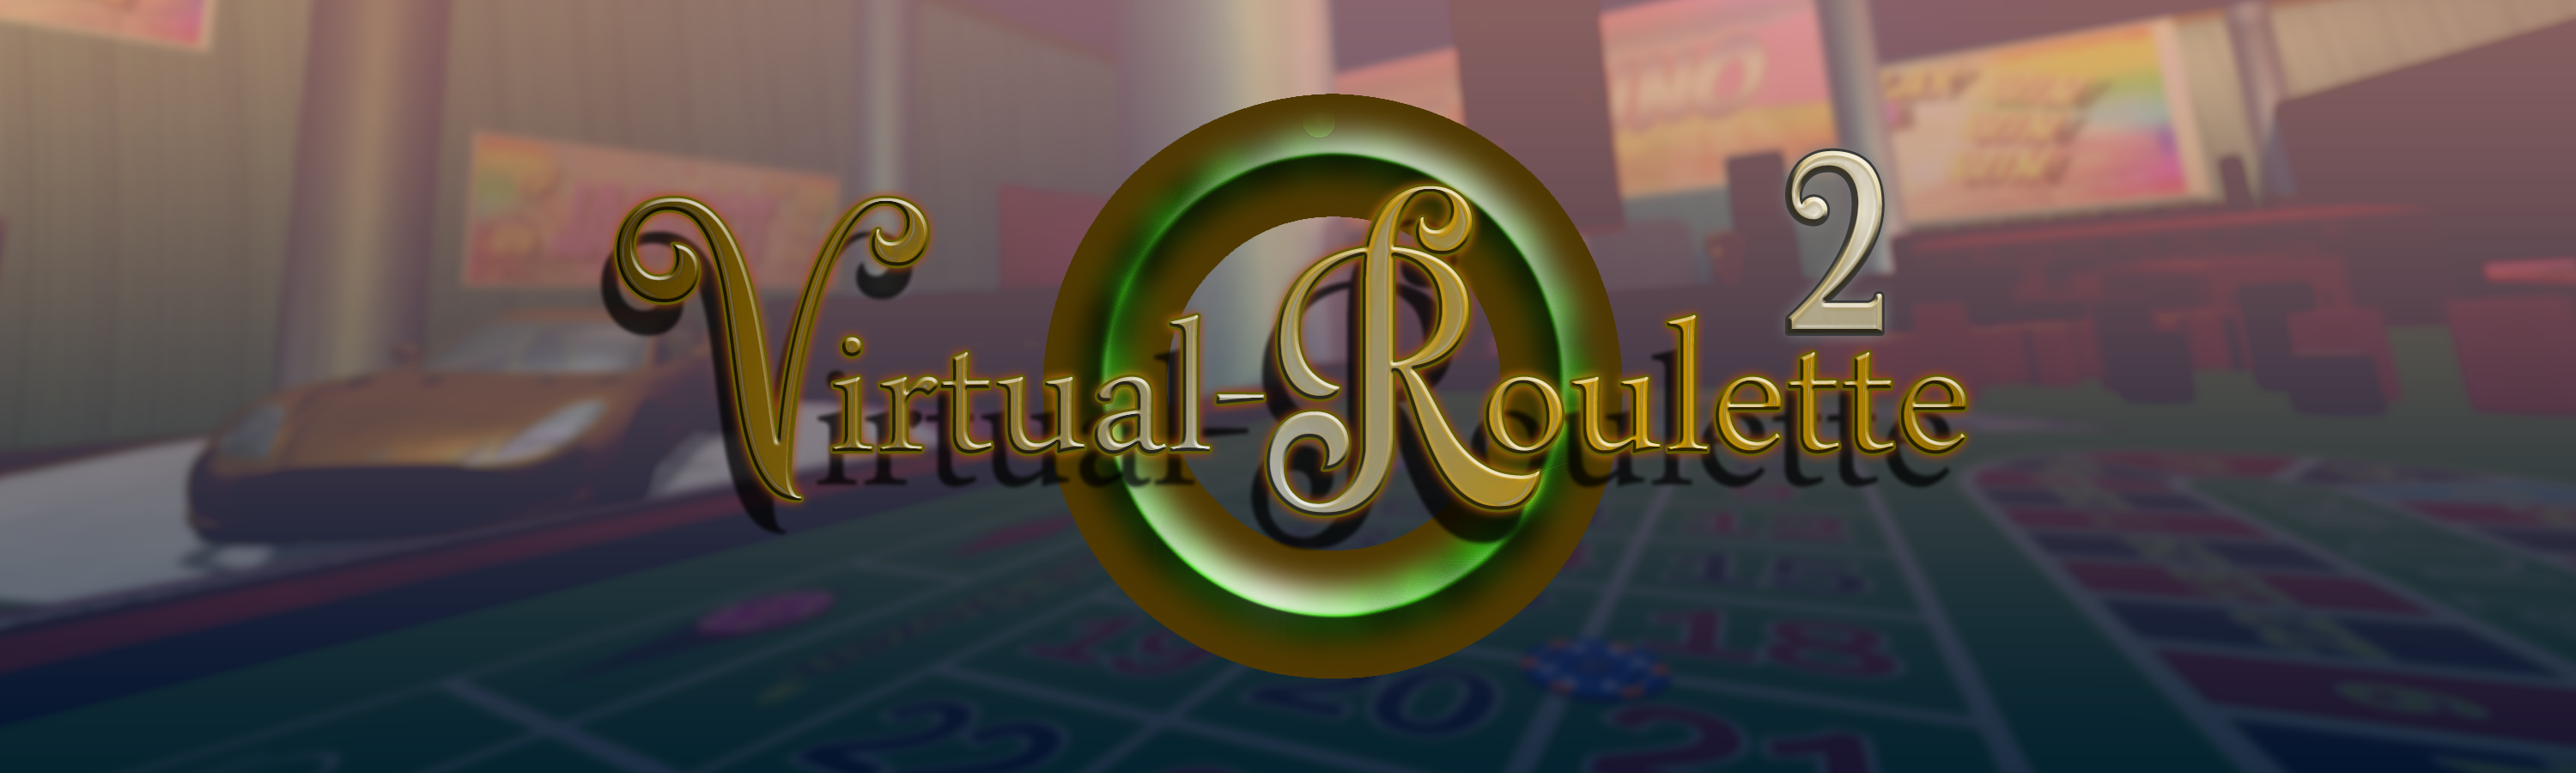 Virtual Roulette 2